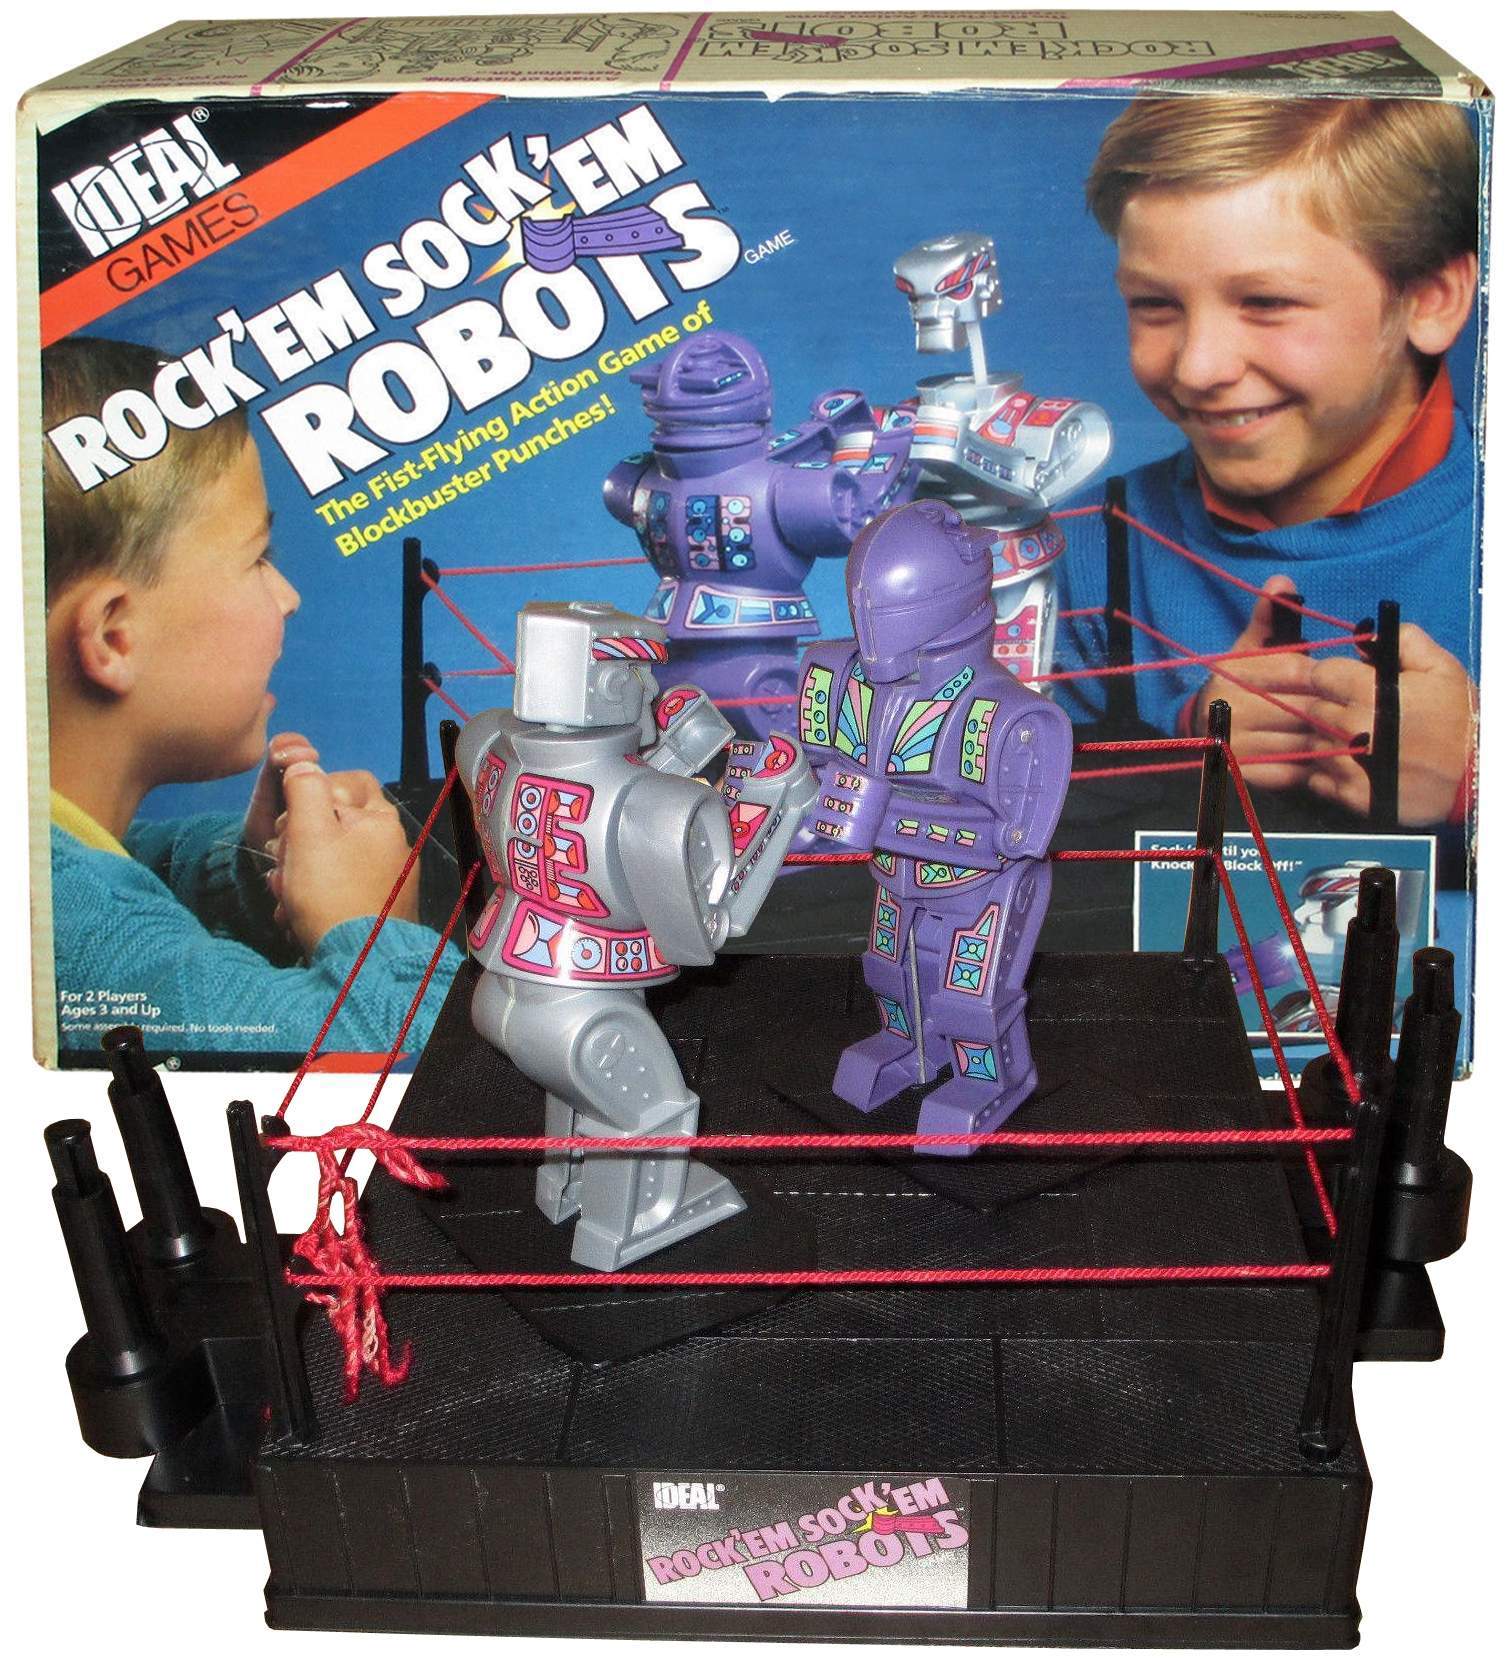 Rock em Sock em Robots Classic Box Retro Boxing Fun Toy Game 1966 Kids 